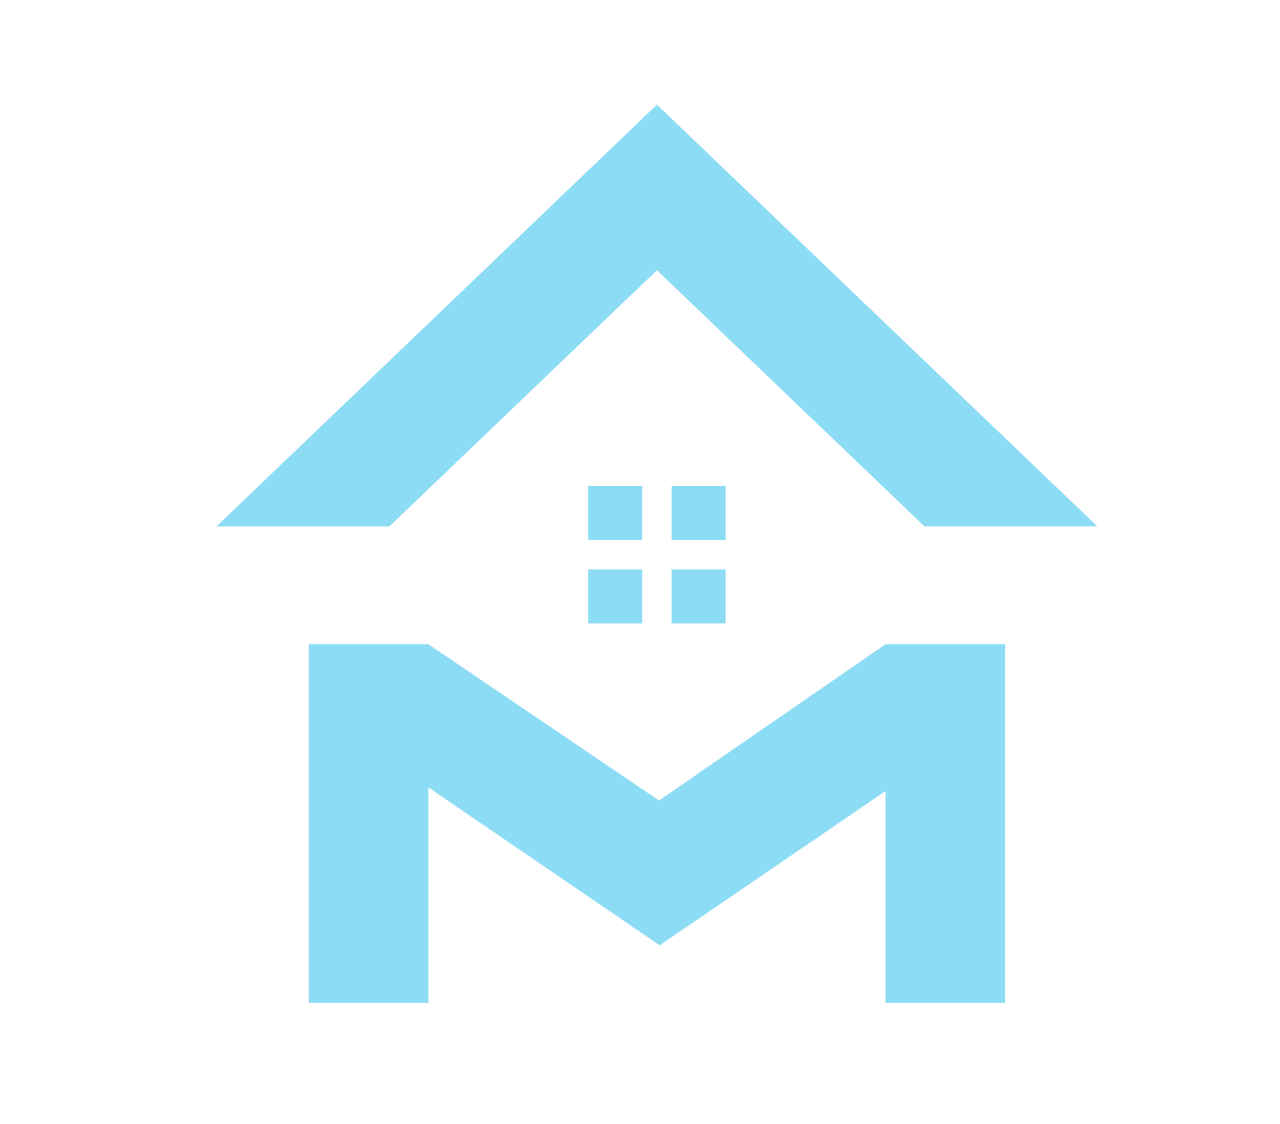 M&V FLOORING&REMODELING INC.'s web page